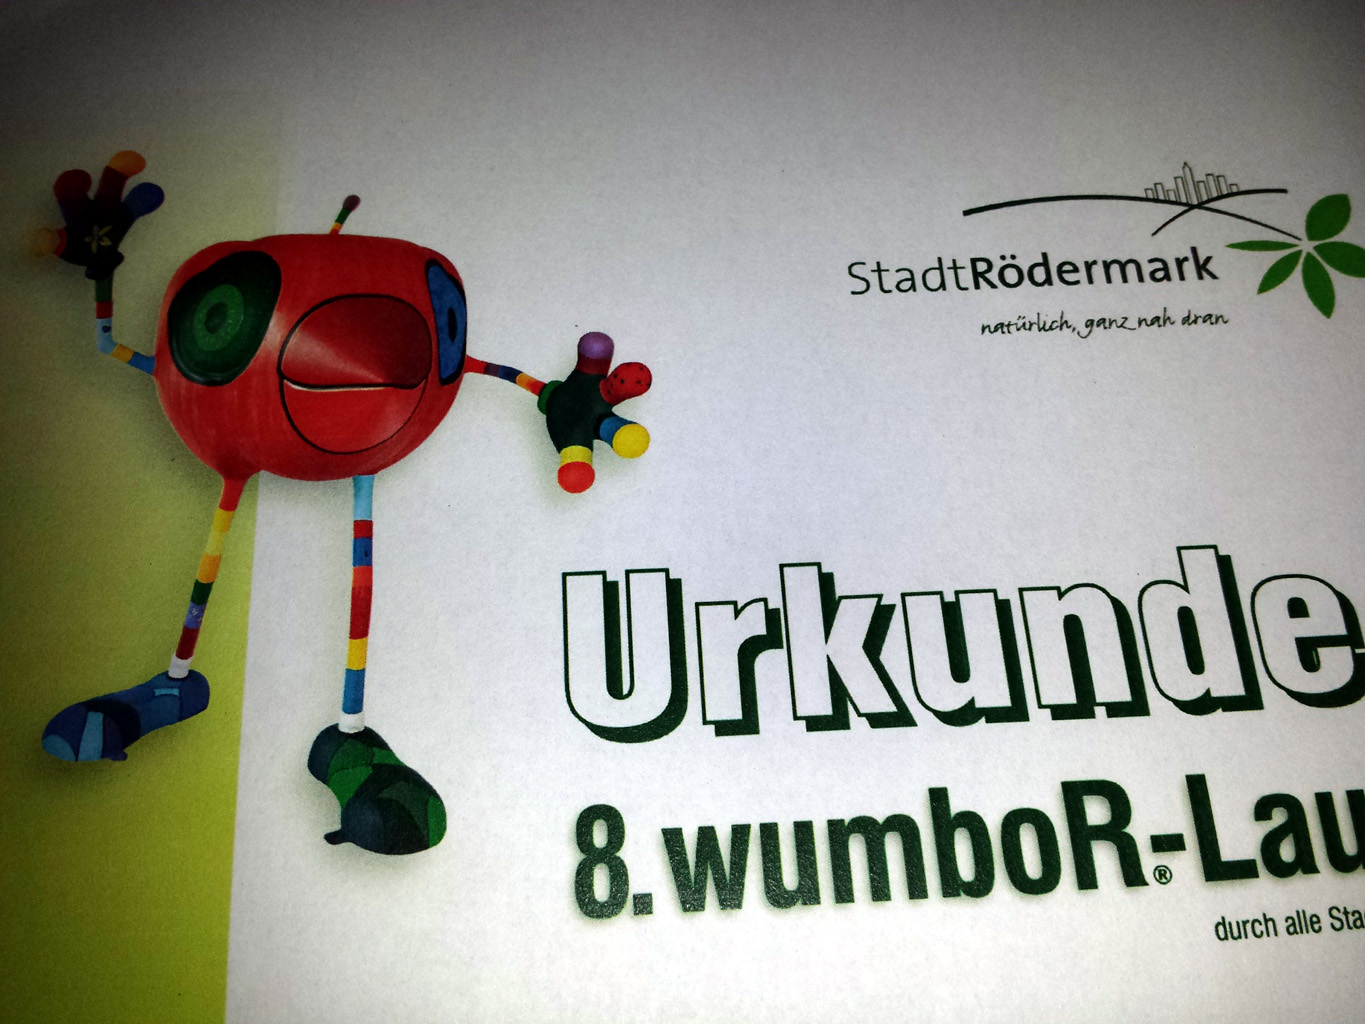 wumboR-Lauf: Urkunde